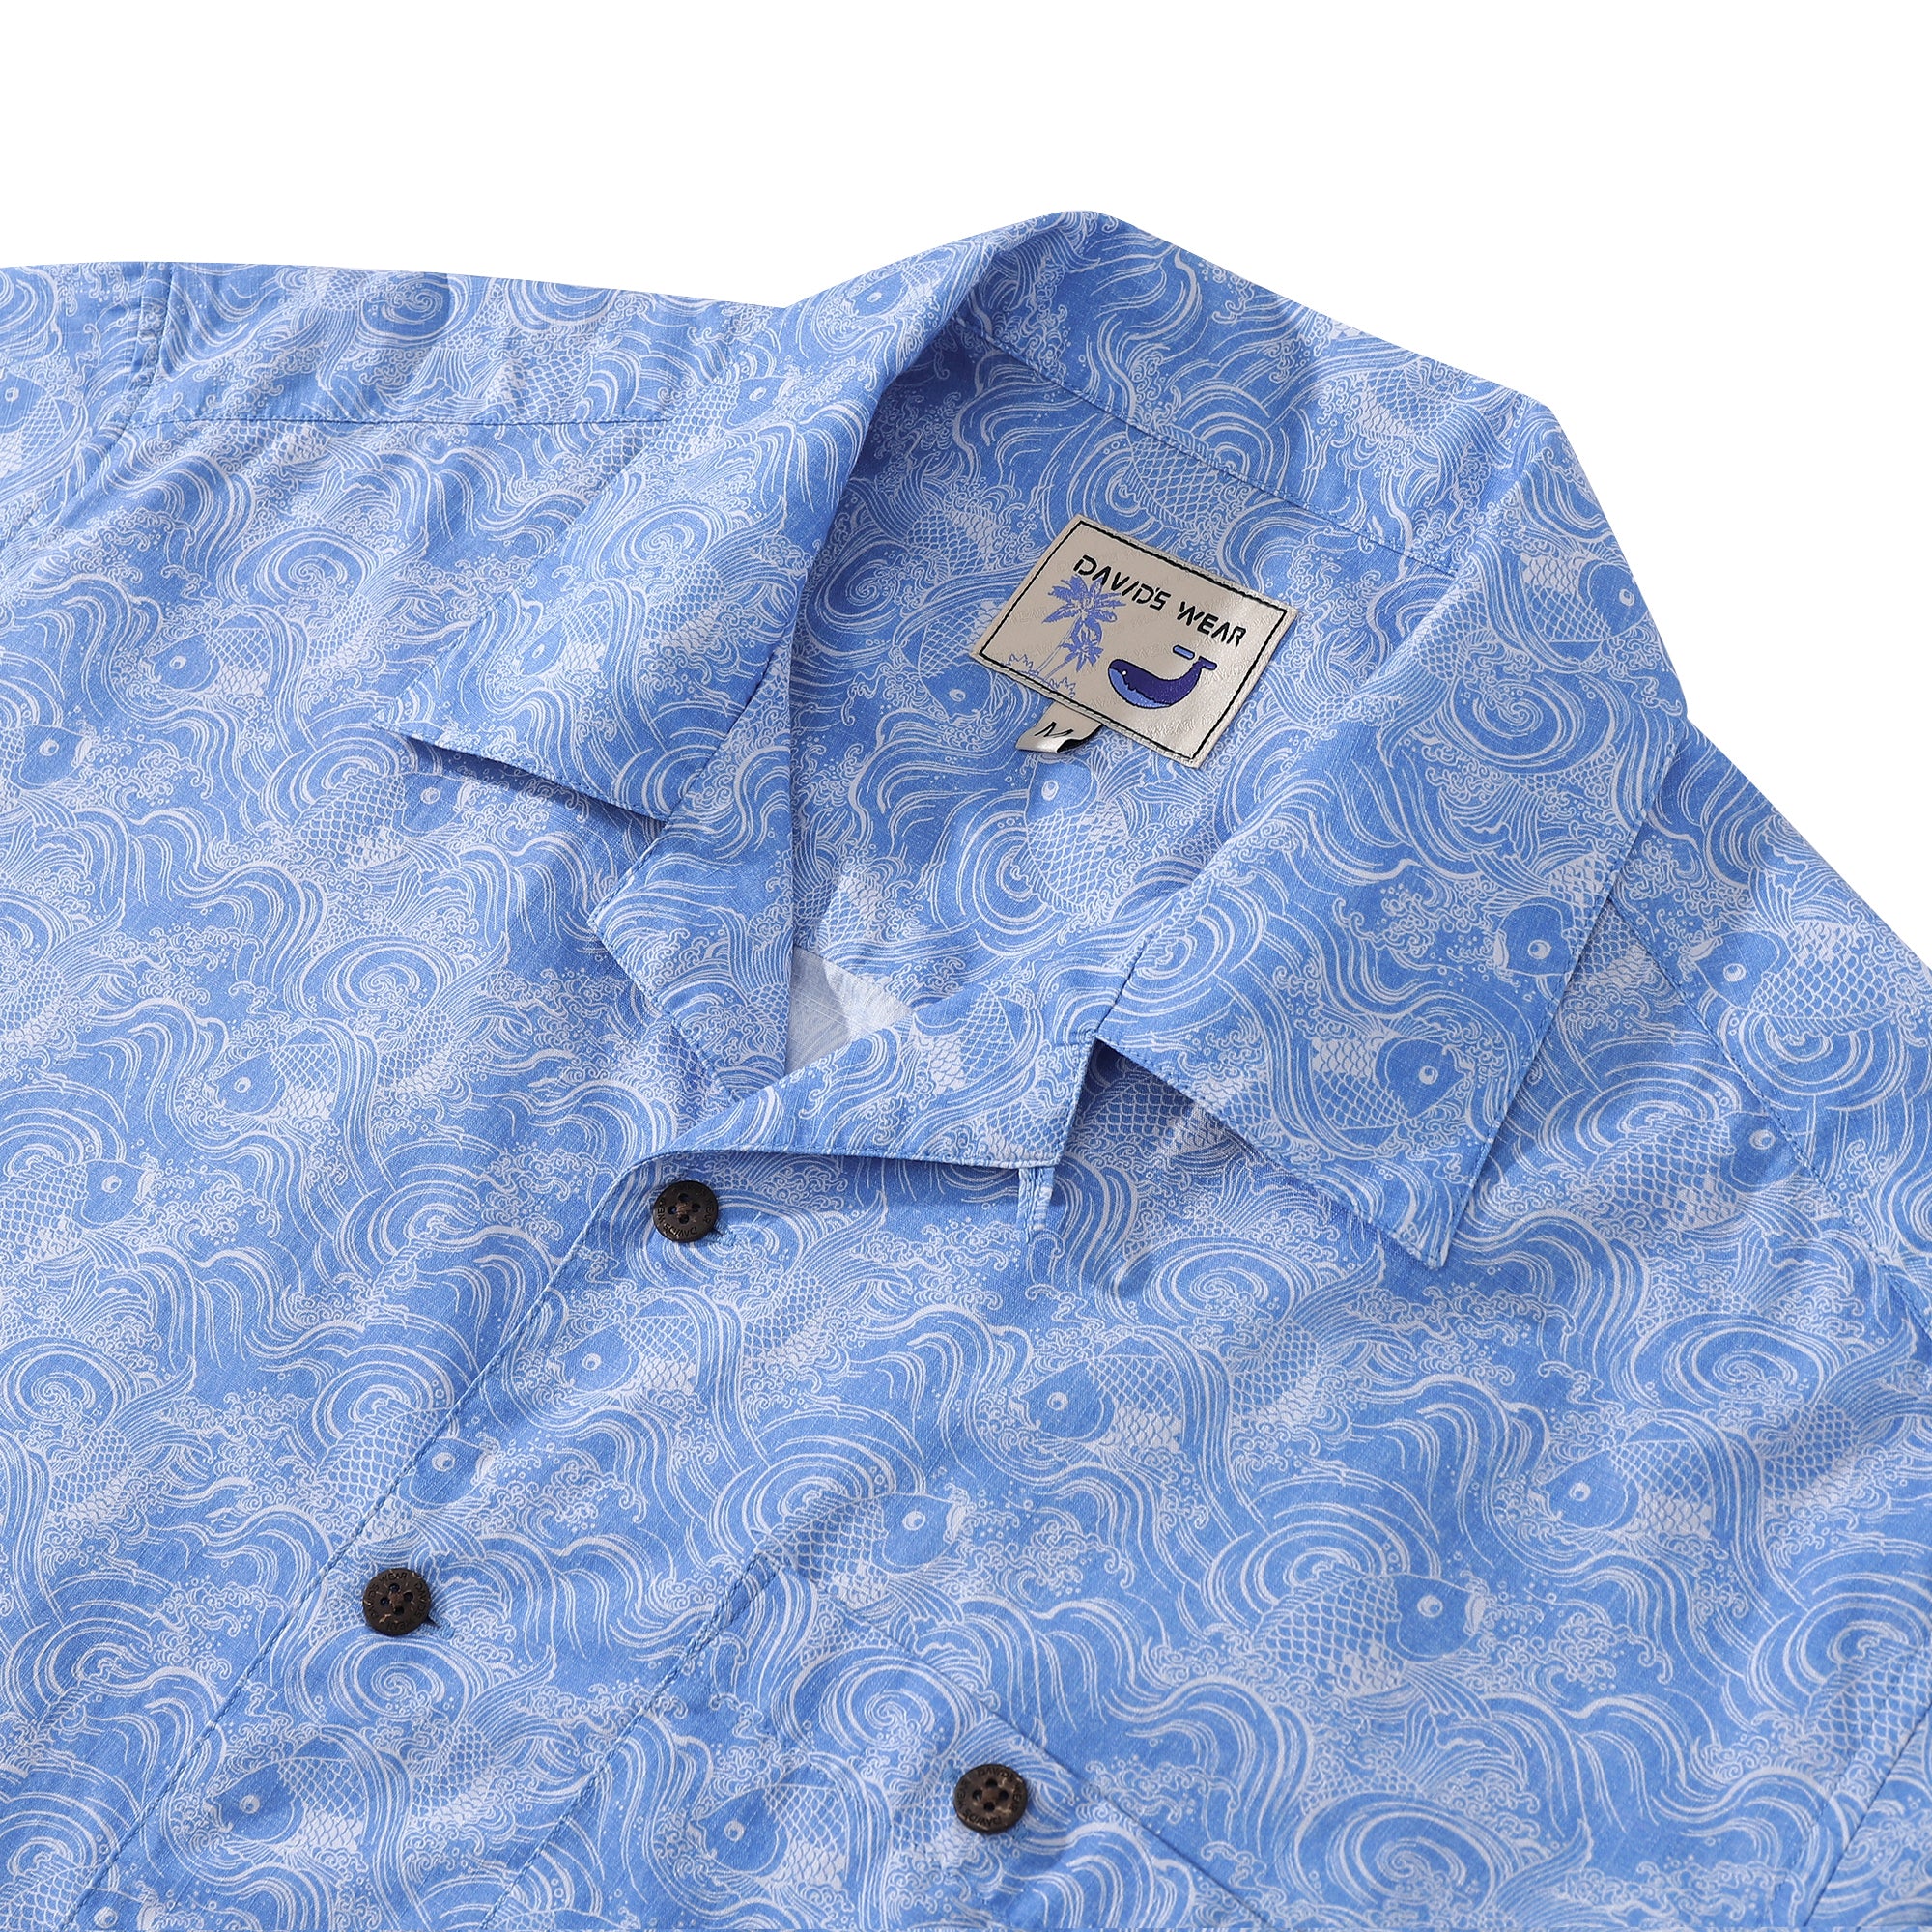 Hawaiian Shirts For Men Traditional Koi Carp Printed 100% Cotton